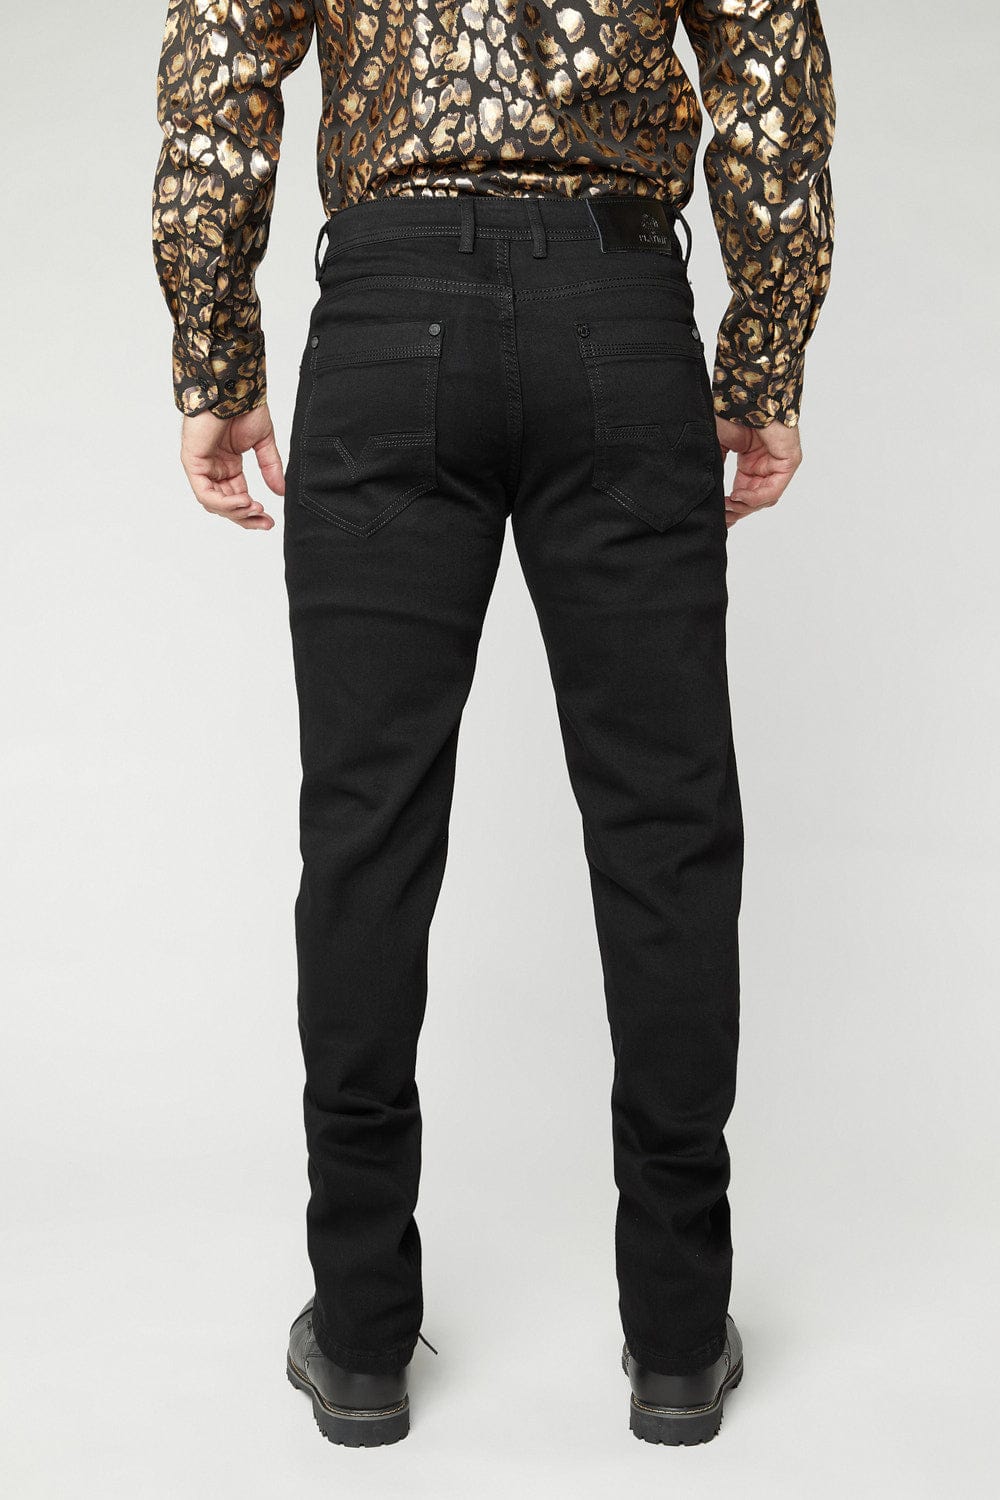 Platini Fashion Jeans Pax Men's Black Slim Stretch Jeans